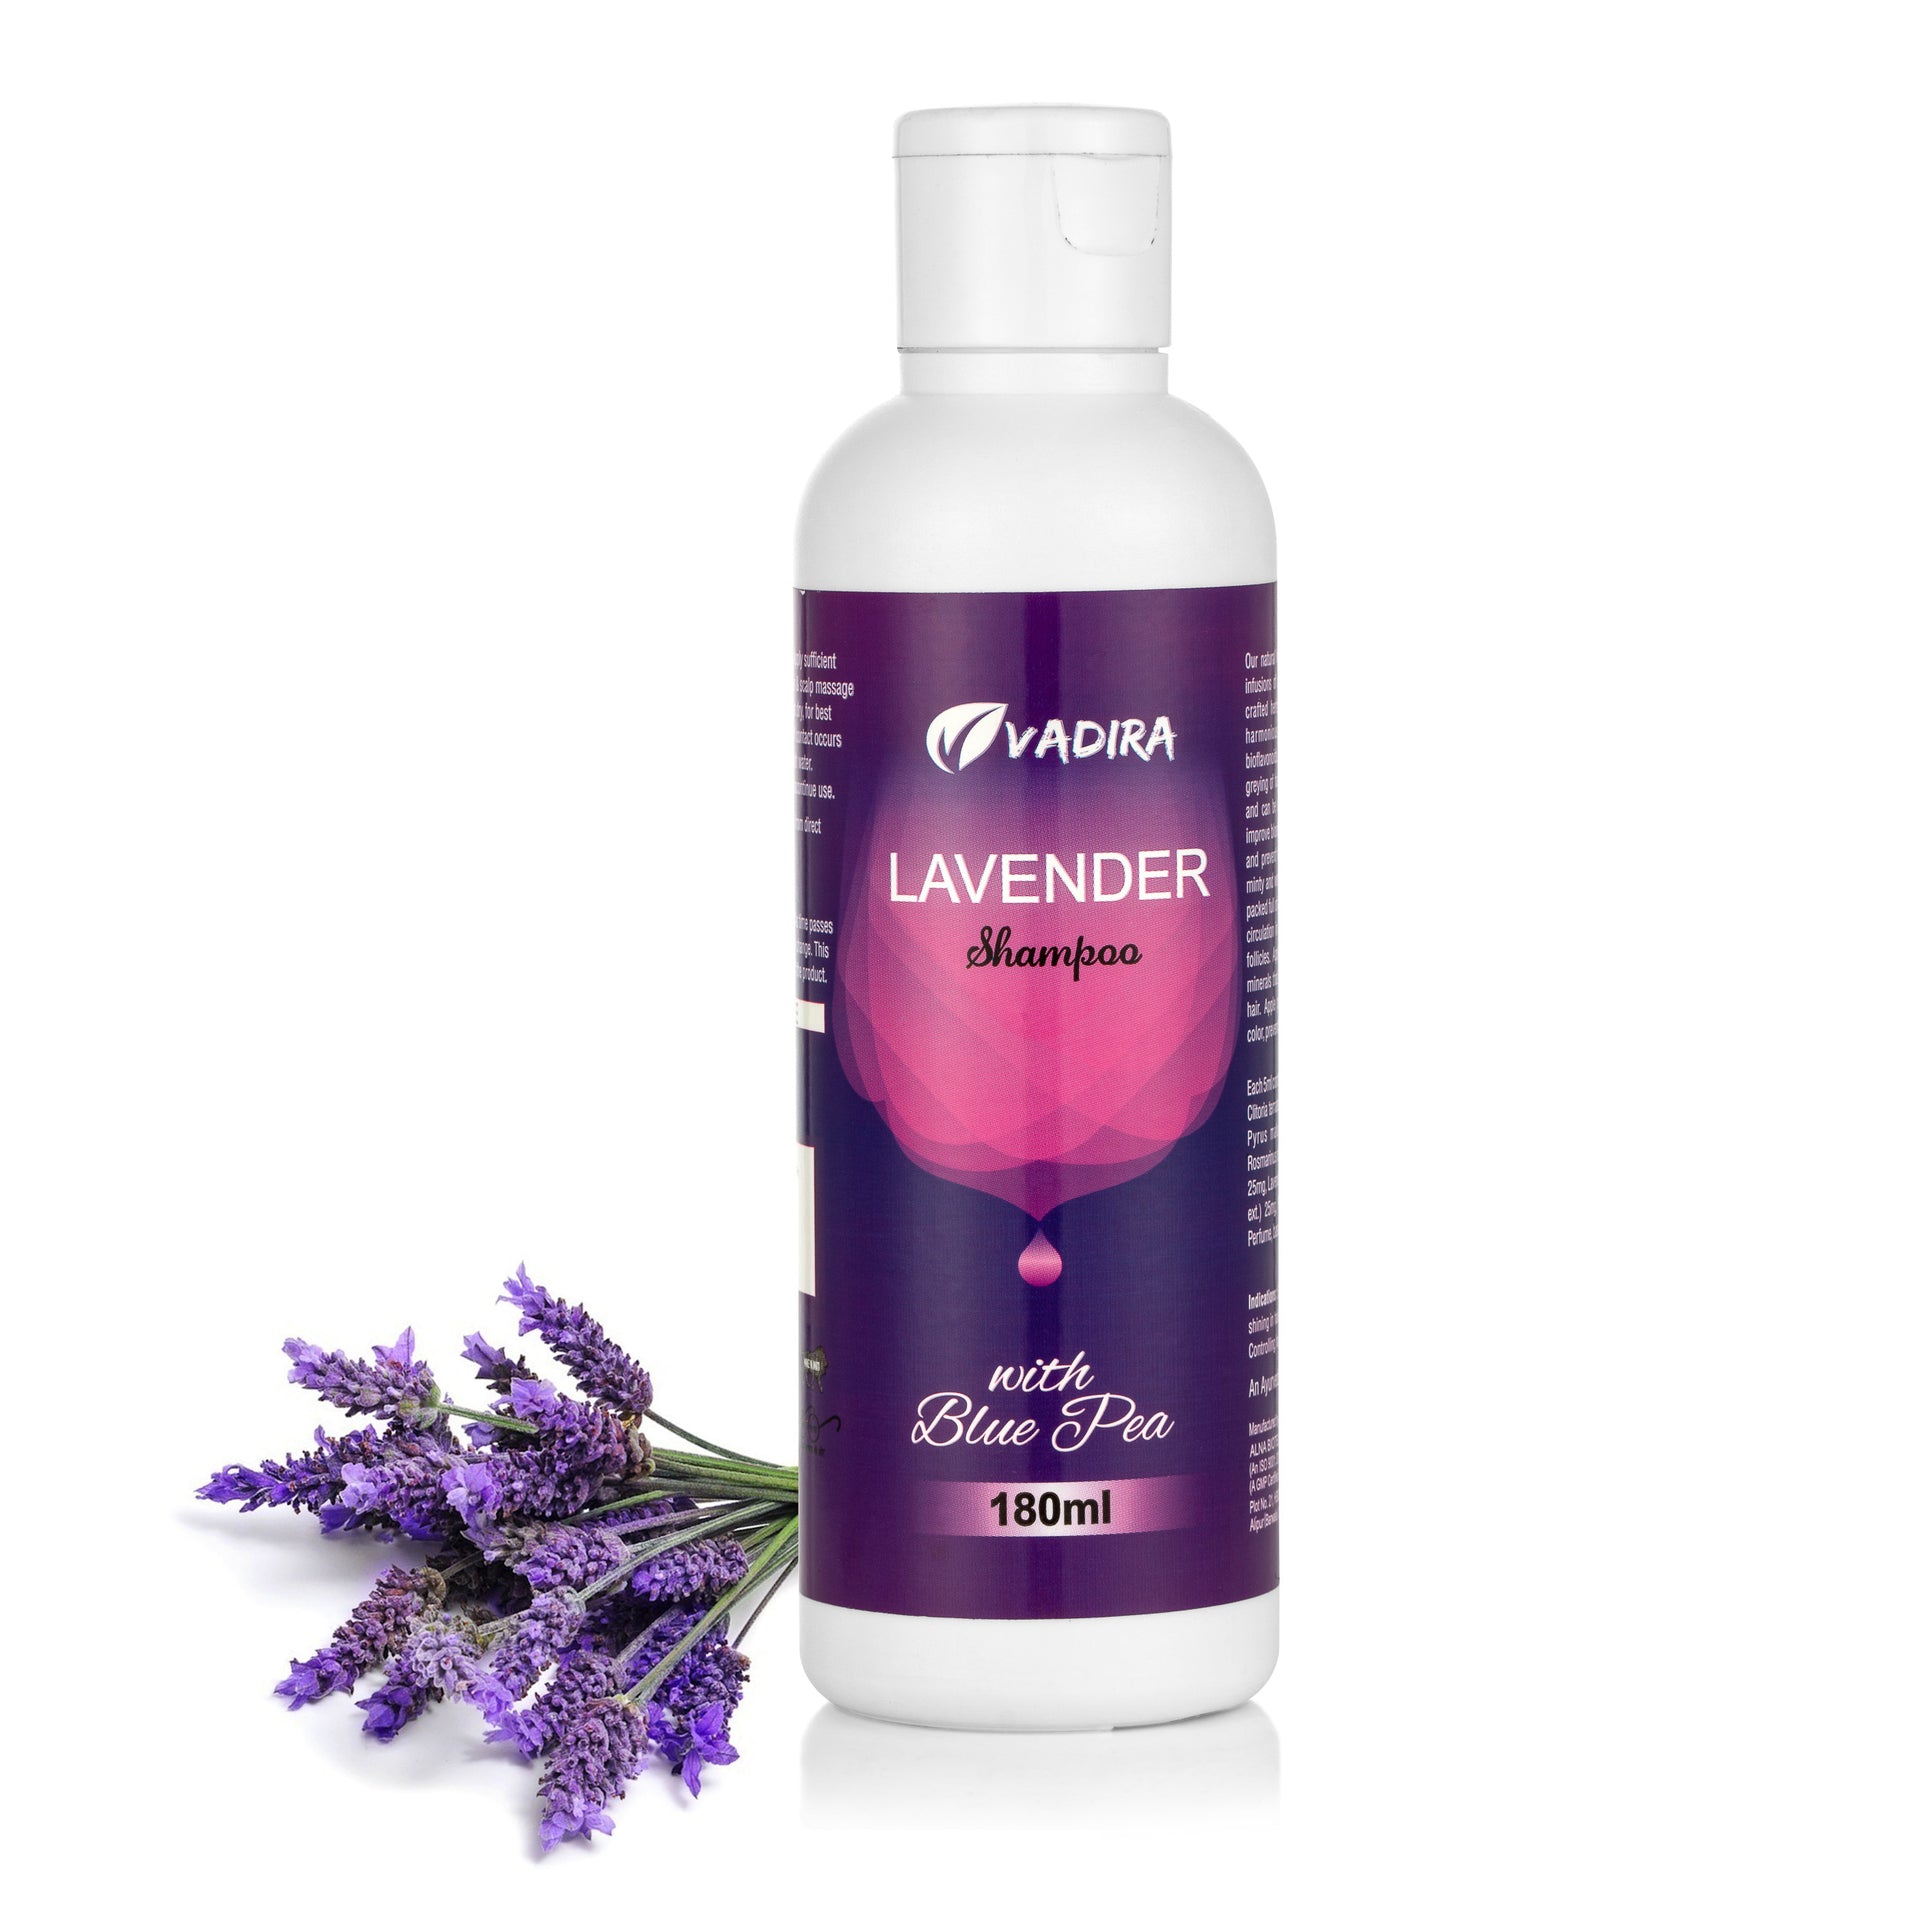 Vadira Lavender Shampoo